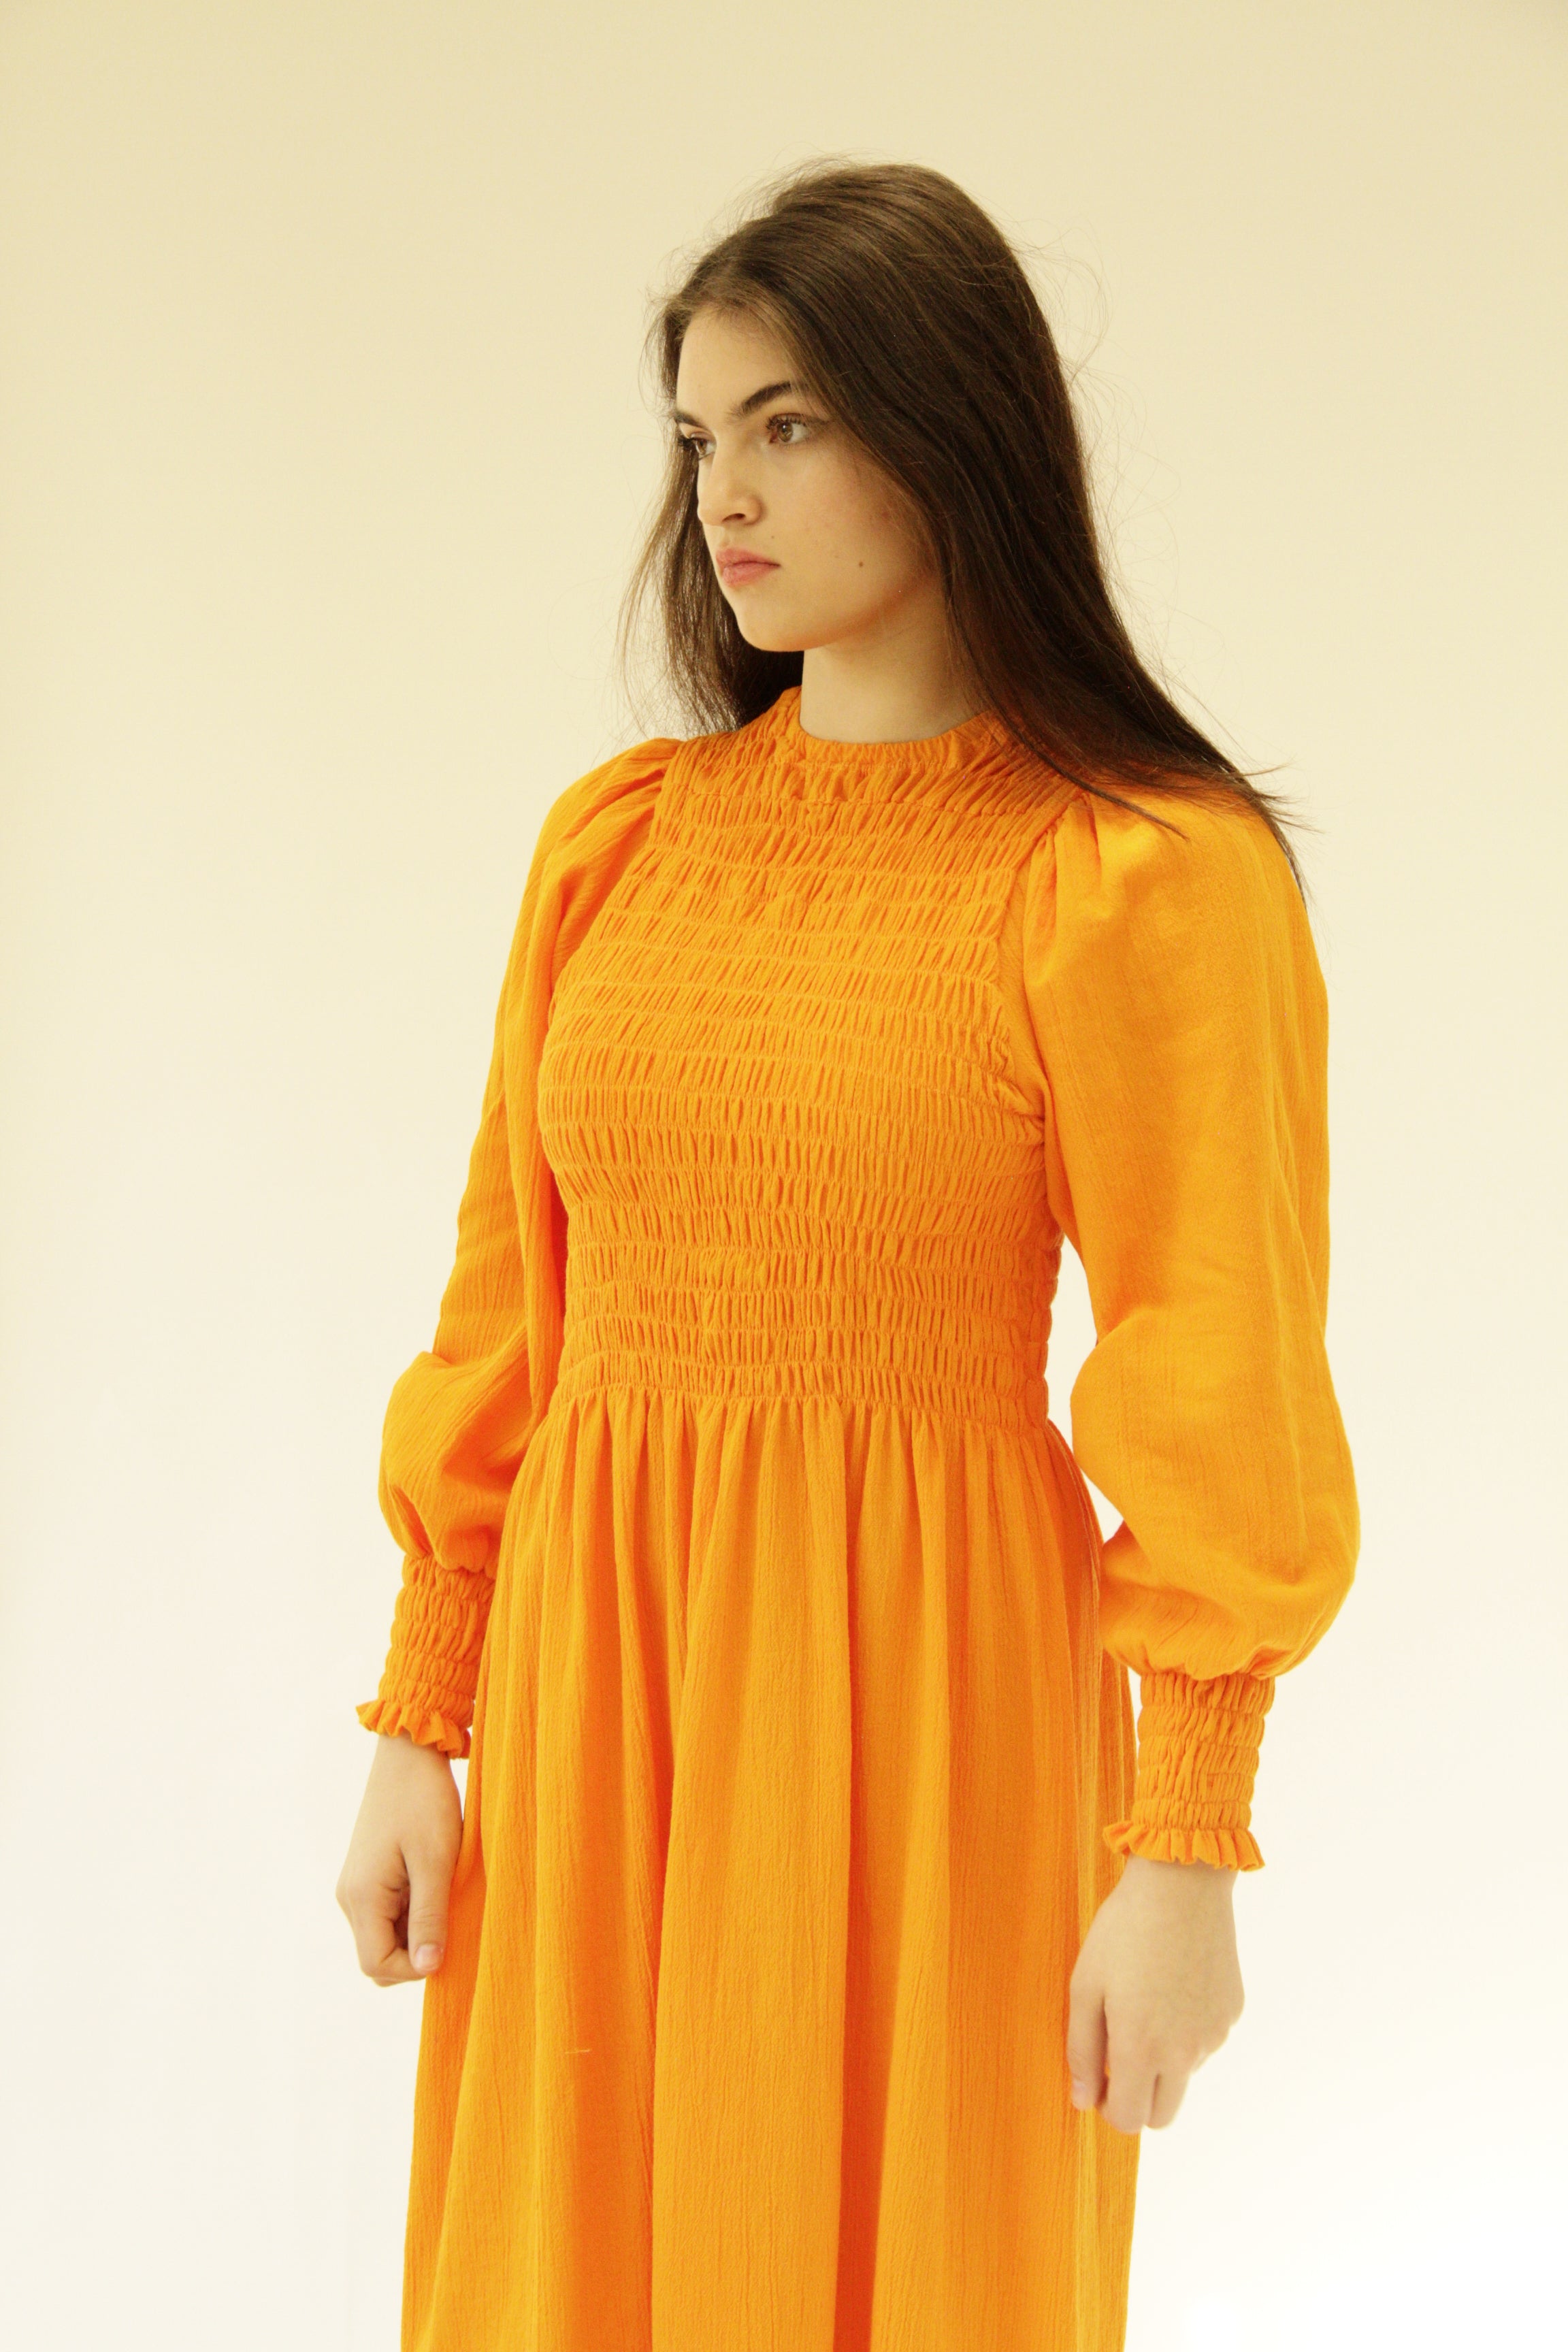 Matisse Marigold Dress